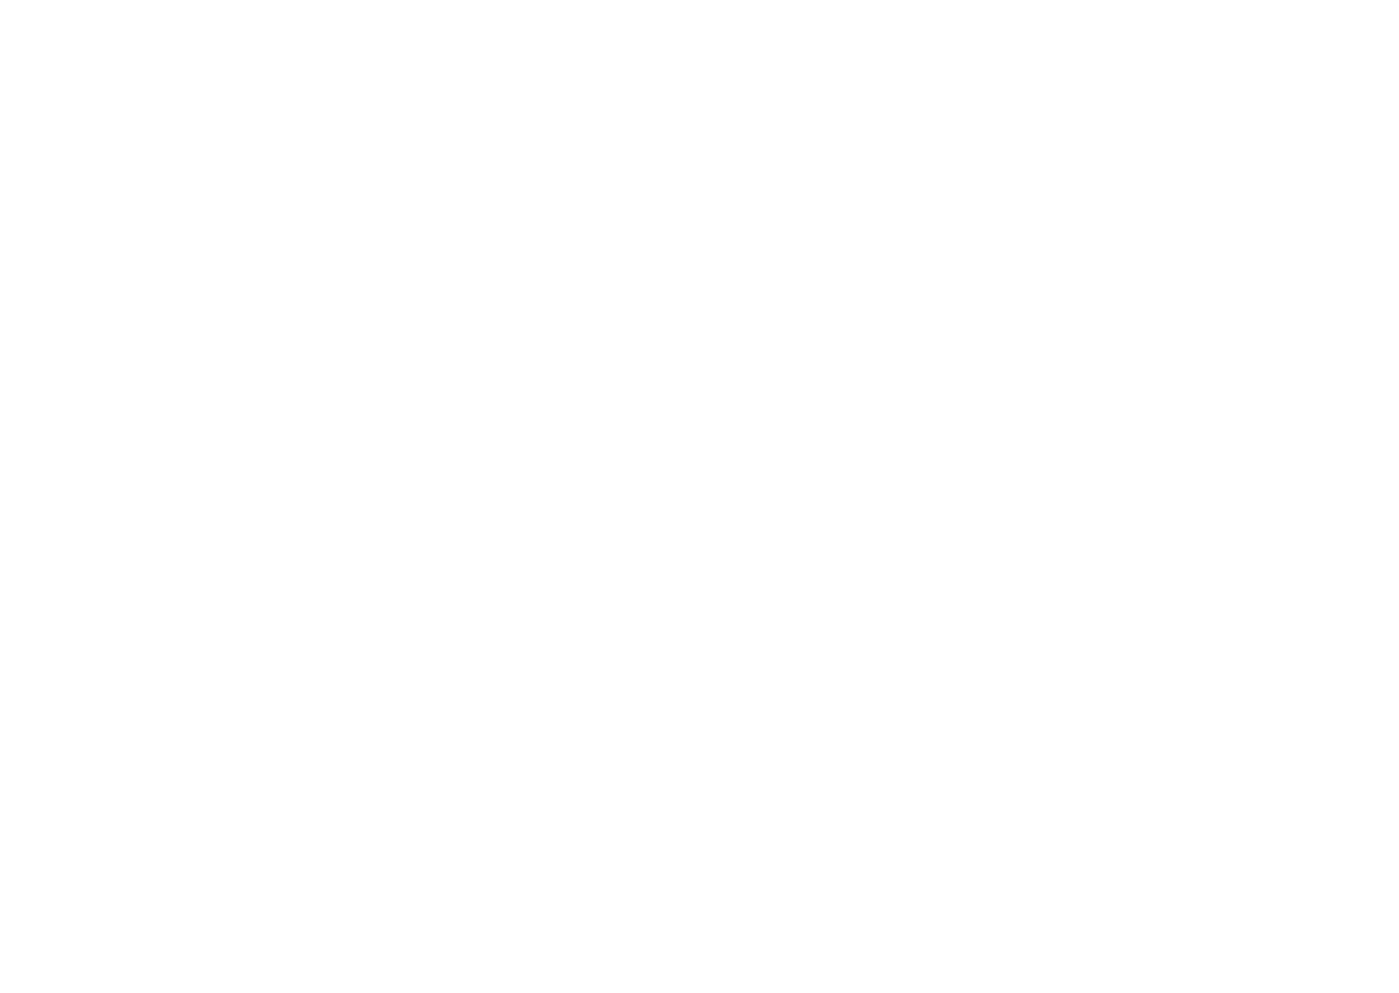 The Shoplifting Pact logo